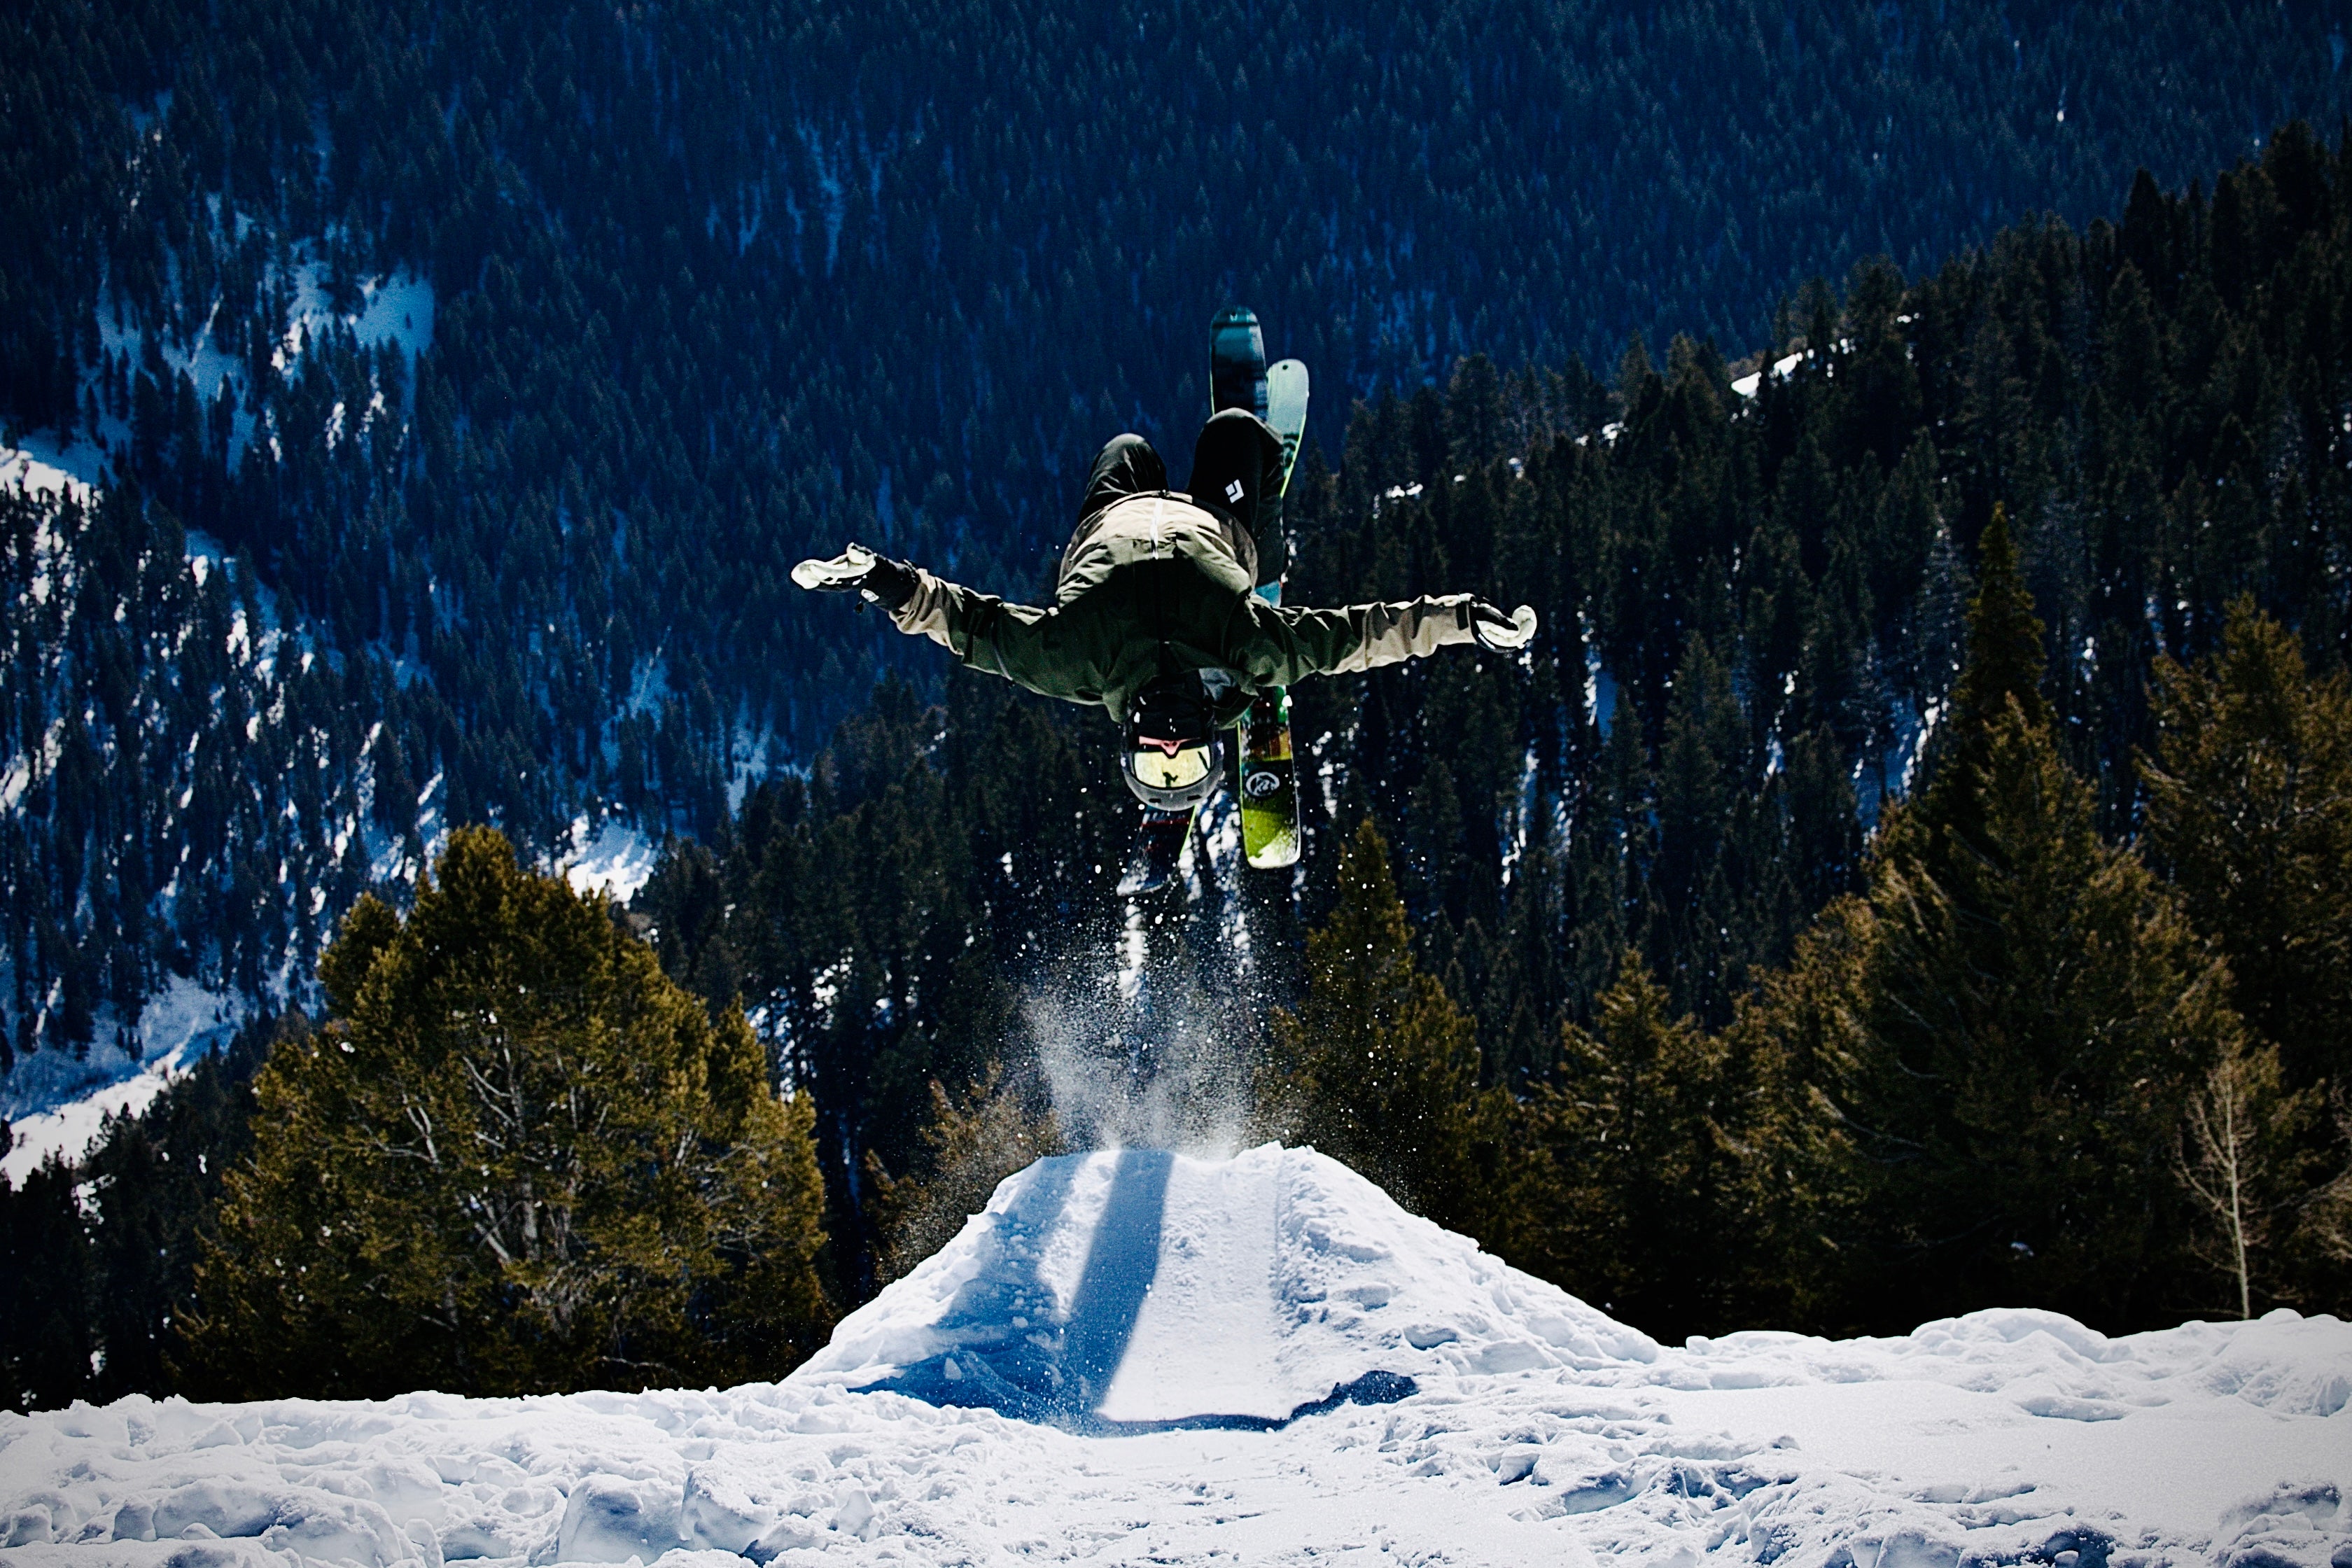 skier doing a back flip on a snowy mountain side